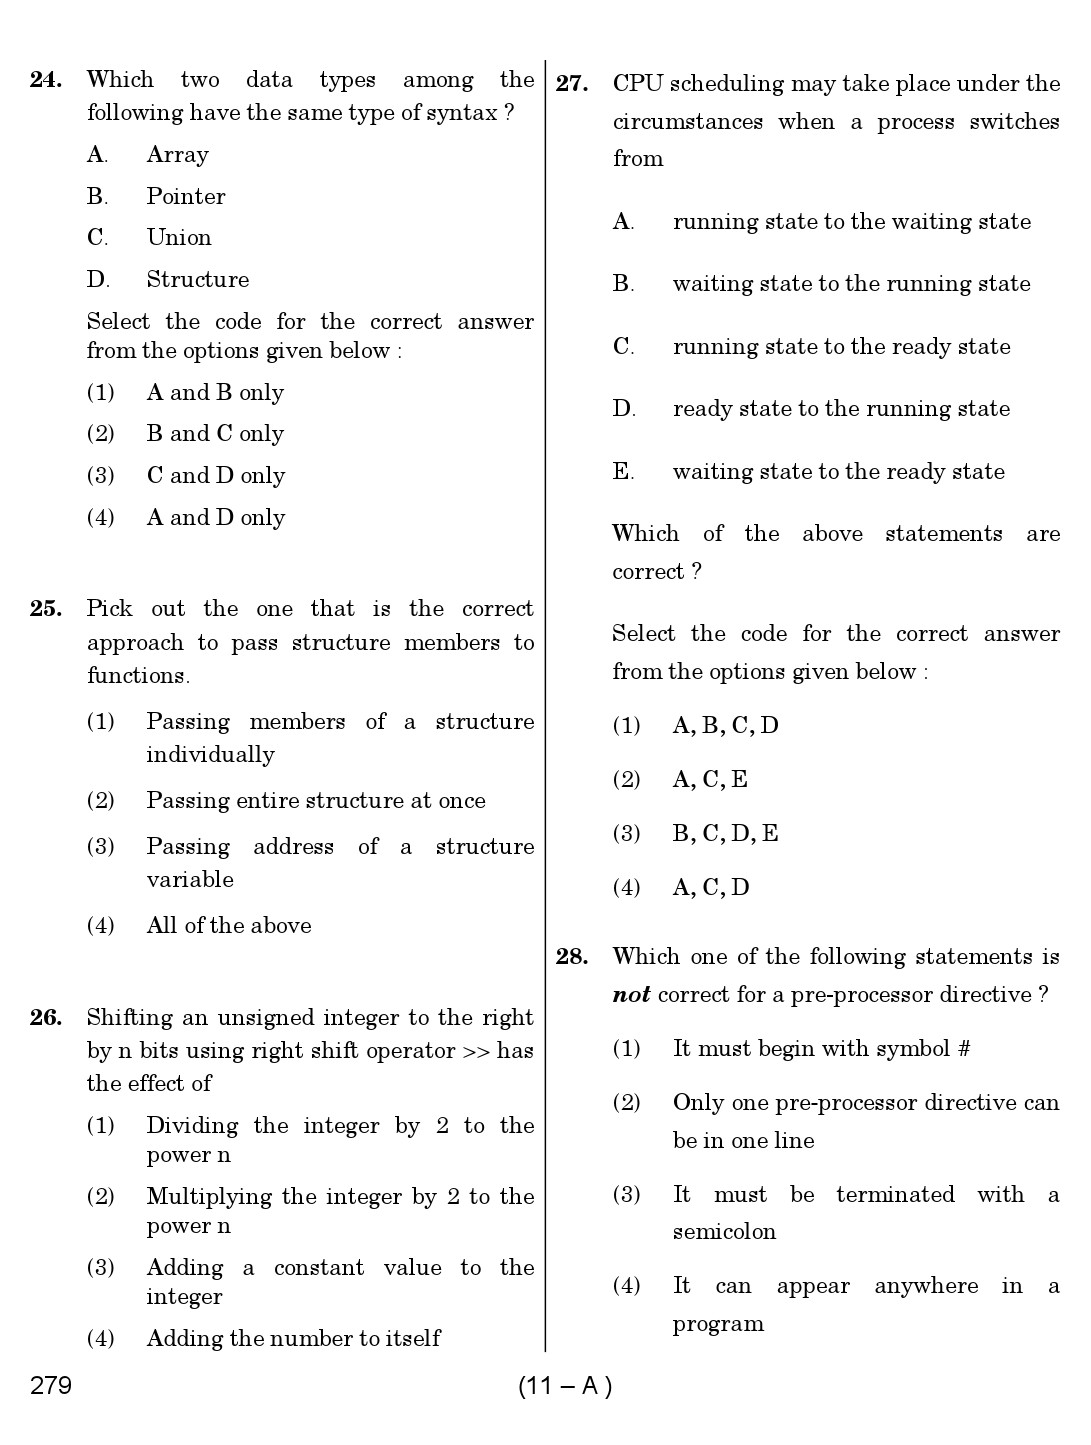 Karnataka PSC Computer Science Teachers Exam Sample Question Paper Subject code 279 11